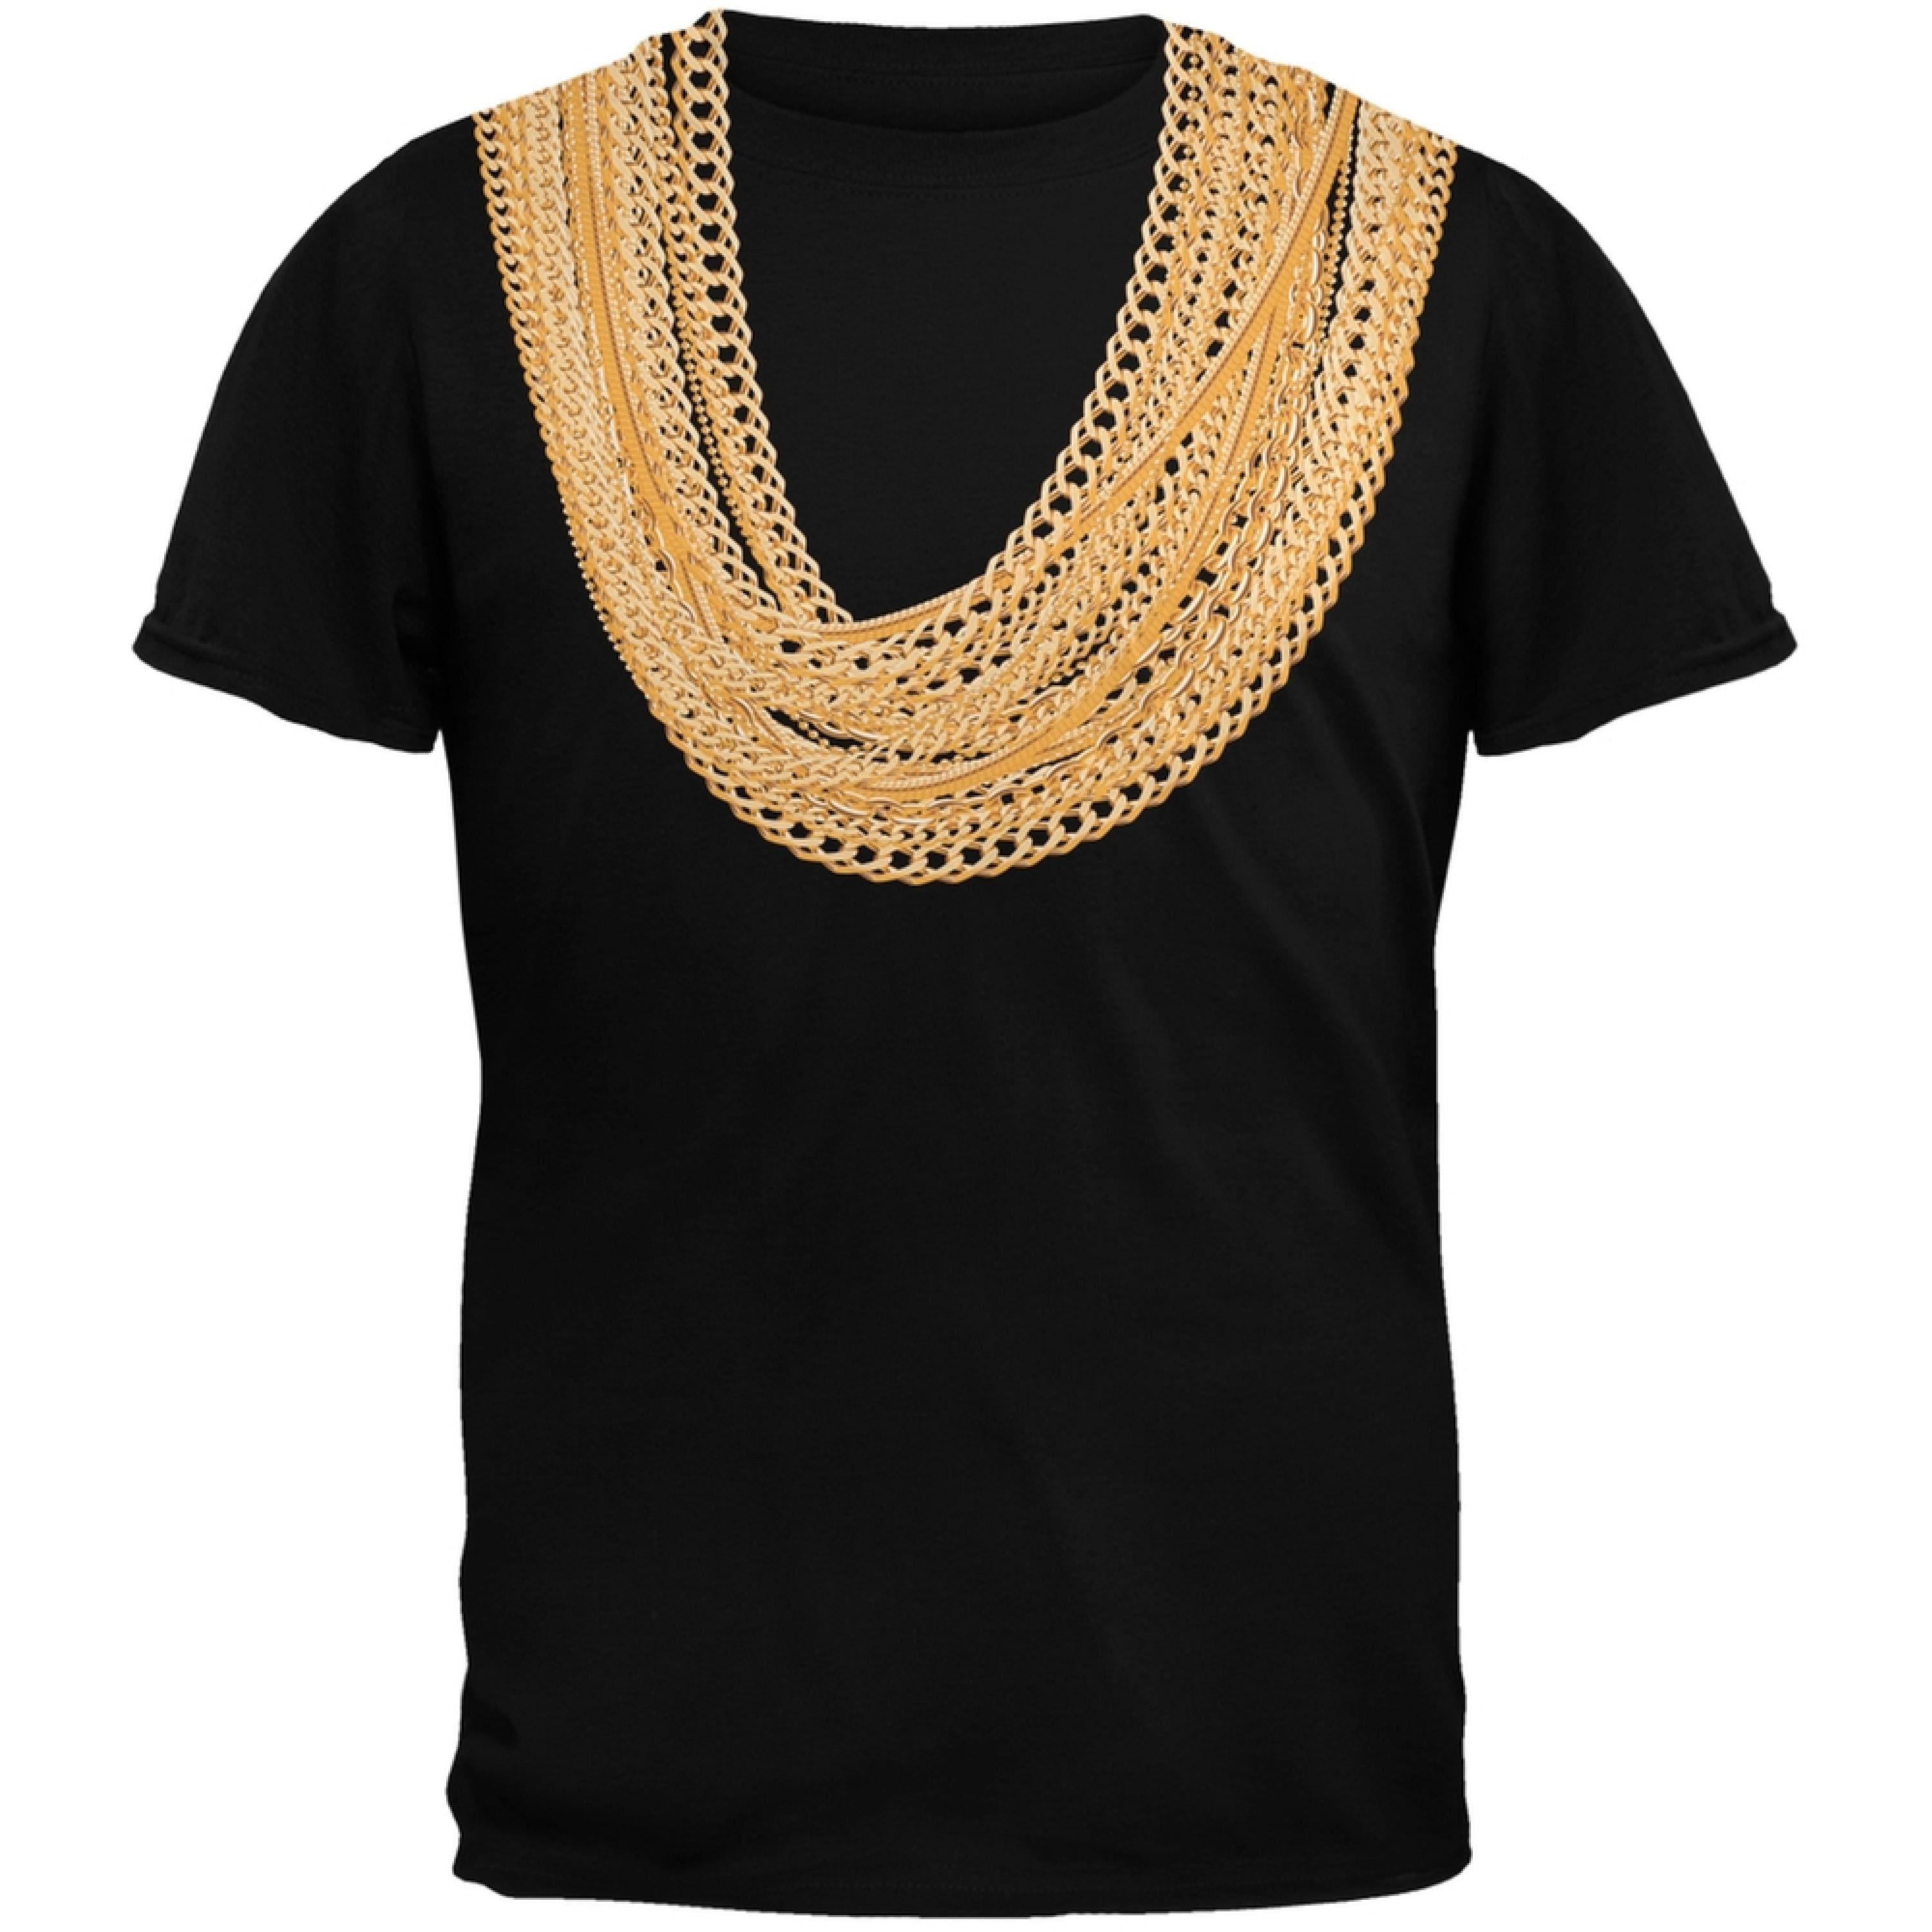 Gold Chains Black Adult T-Shirt